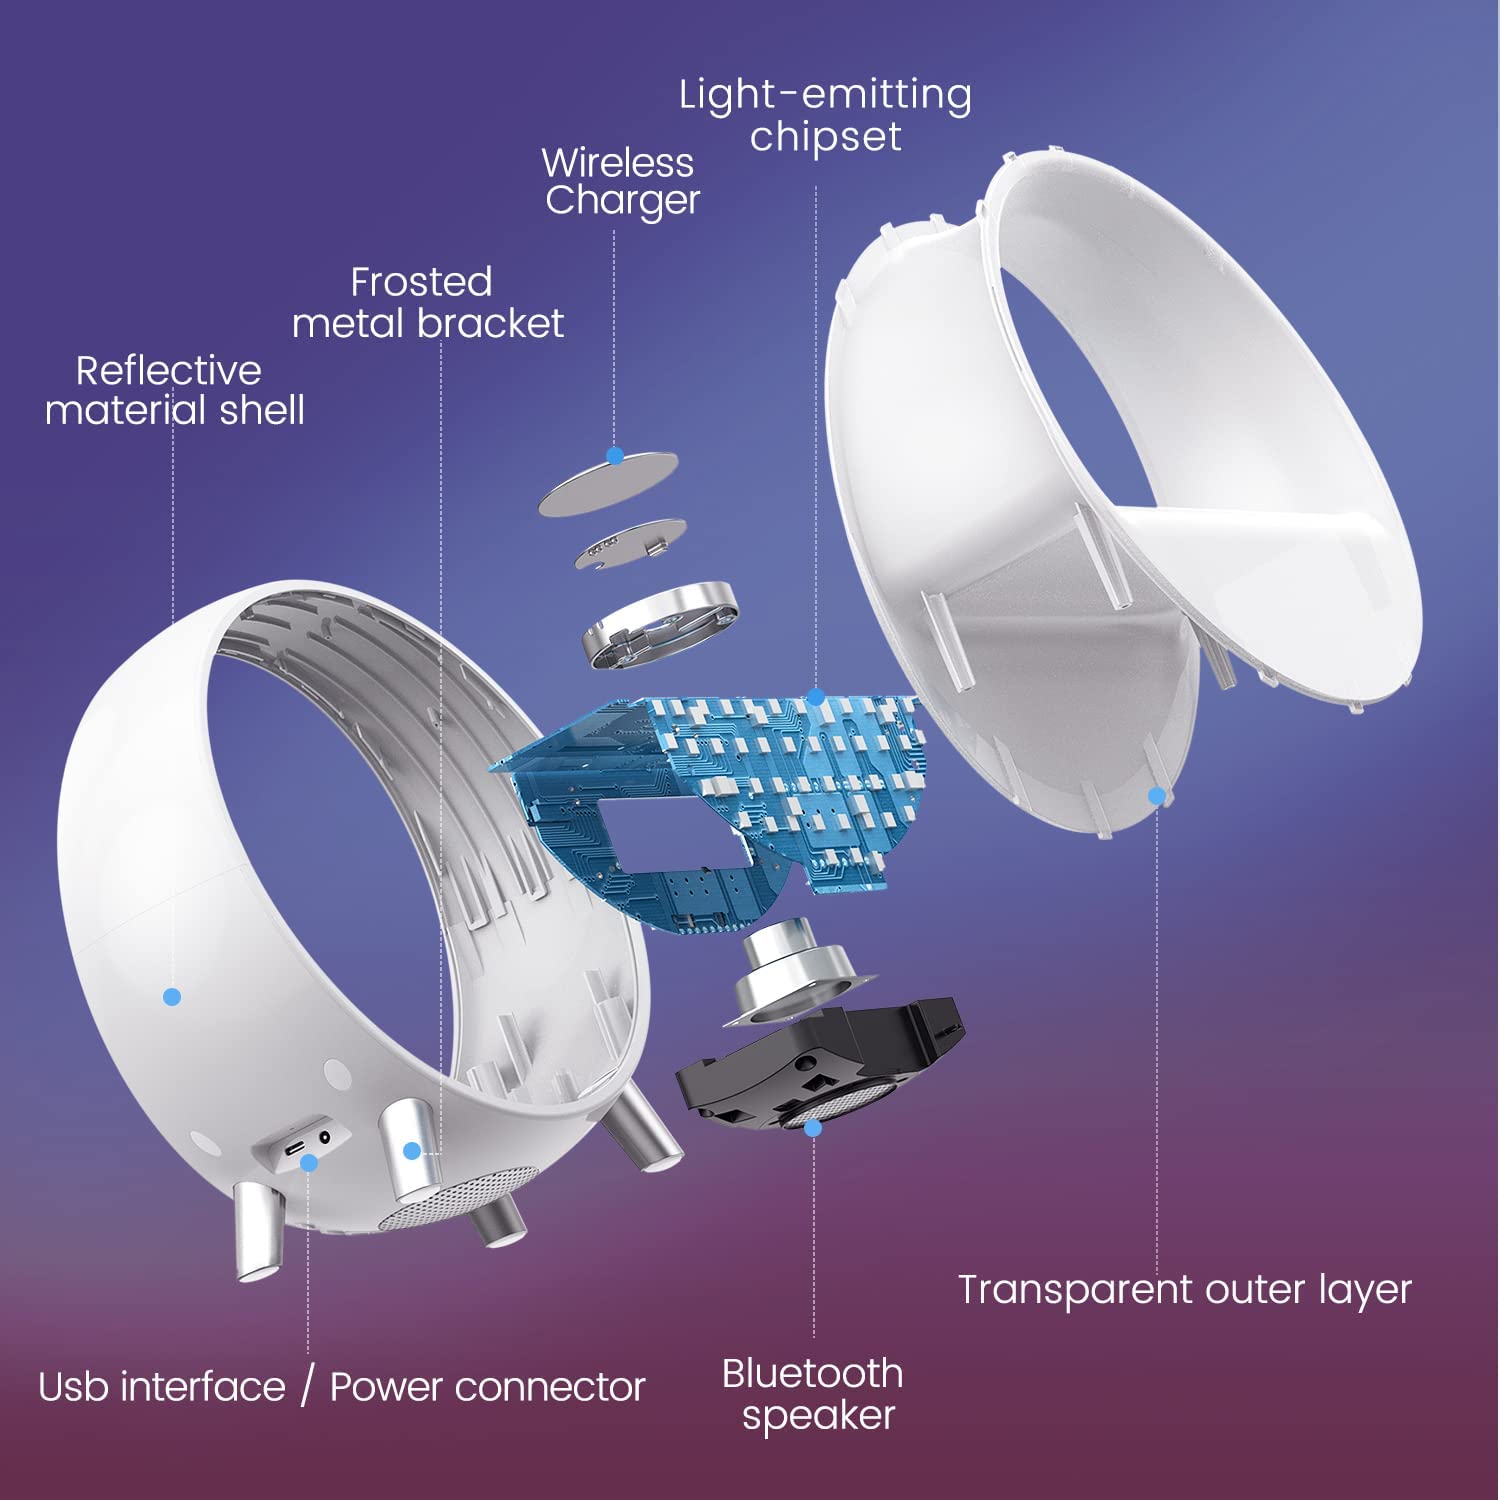 Arches Alarm Clock Wireless Charging Bluetooth Speaker Night Light